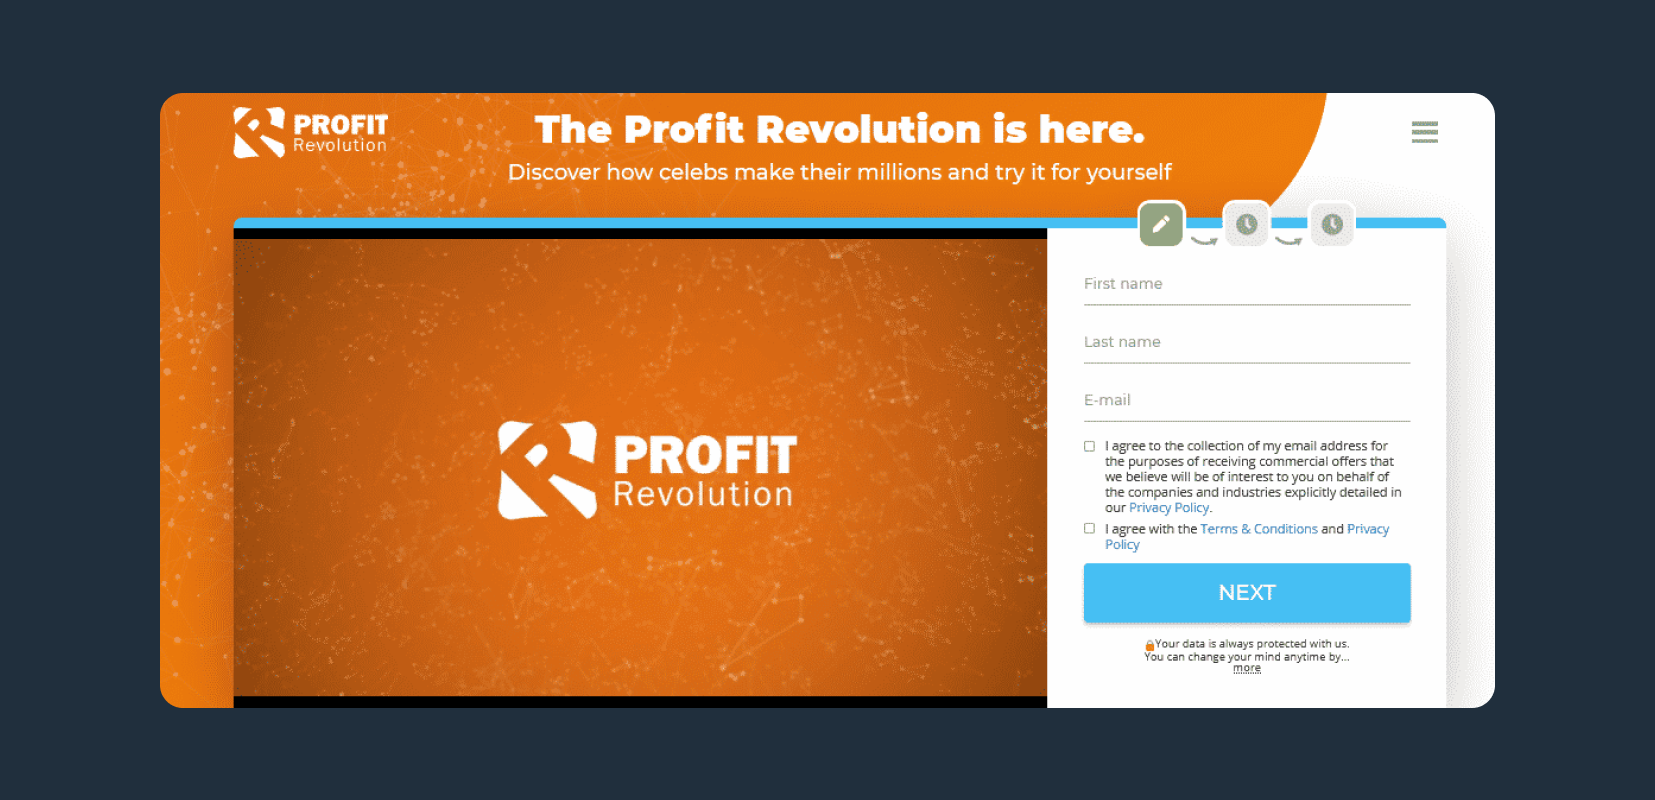 profit revolution